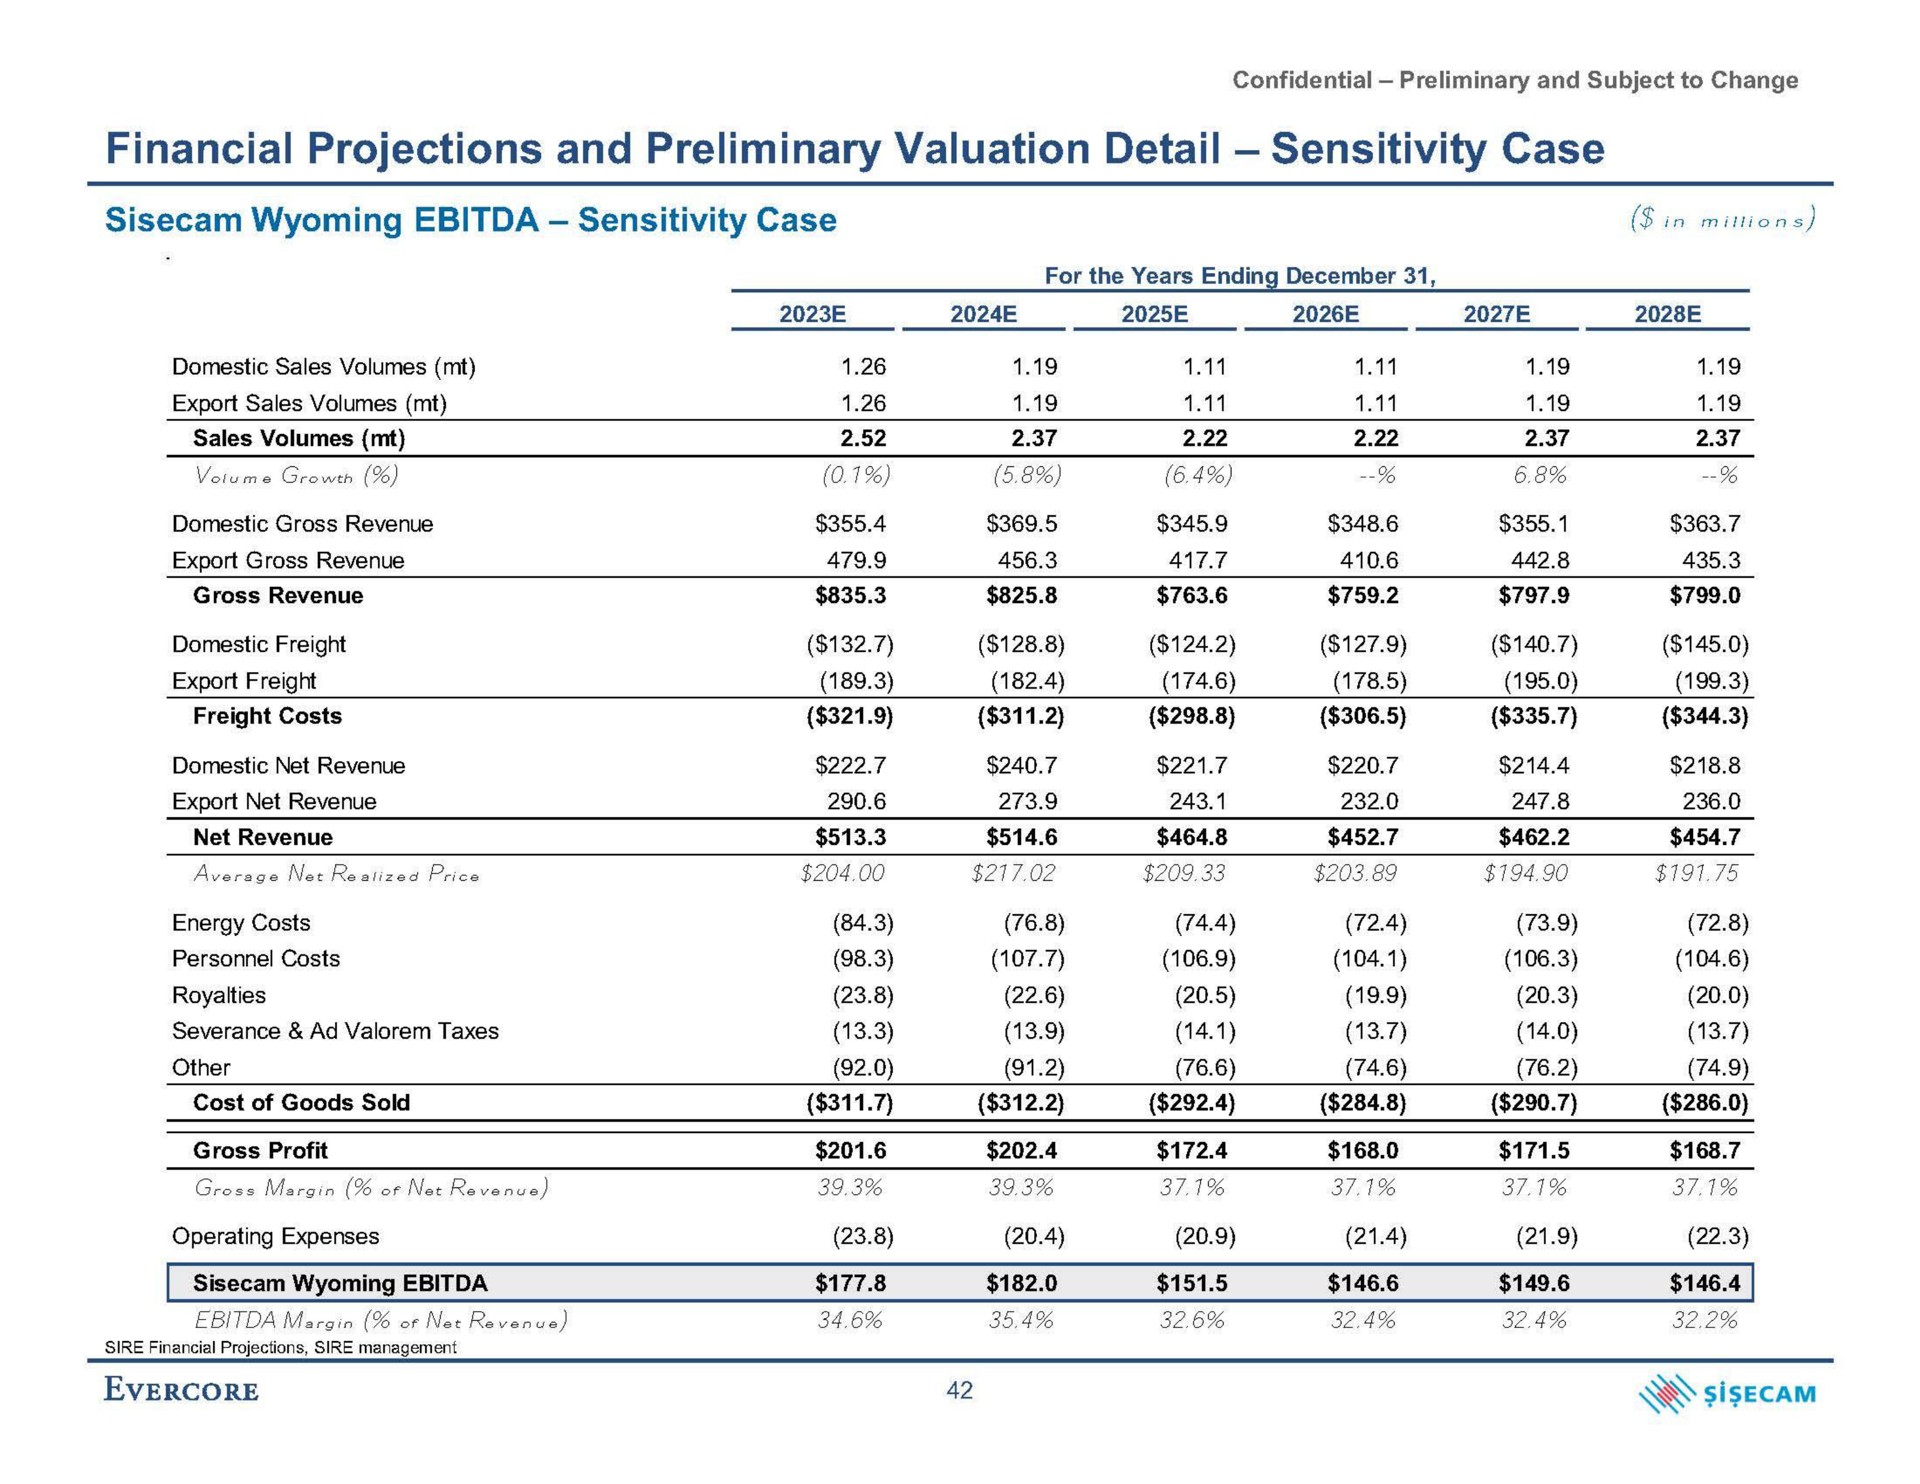 financial projections and preliminary valuation detail sensitivity case sensitivity case | Evercore